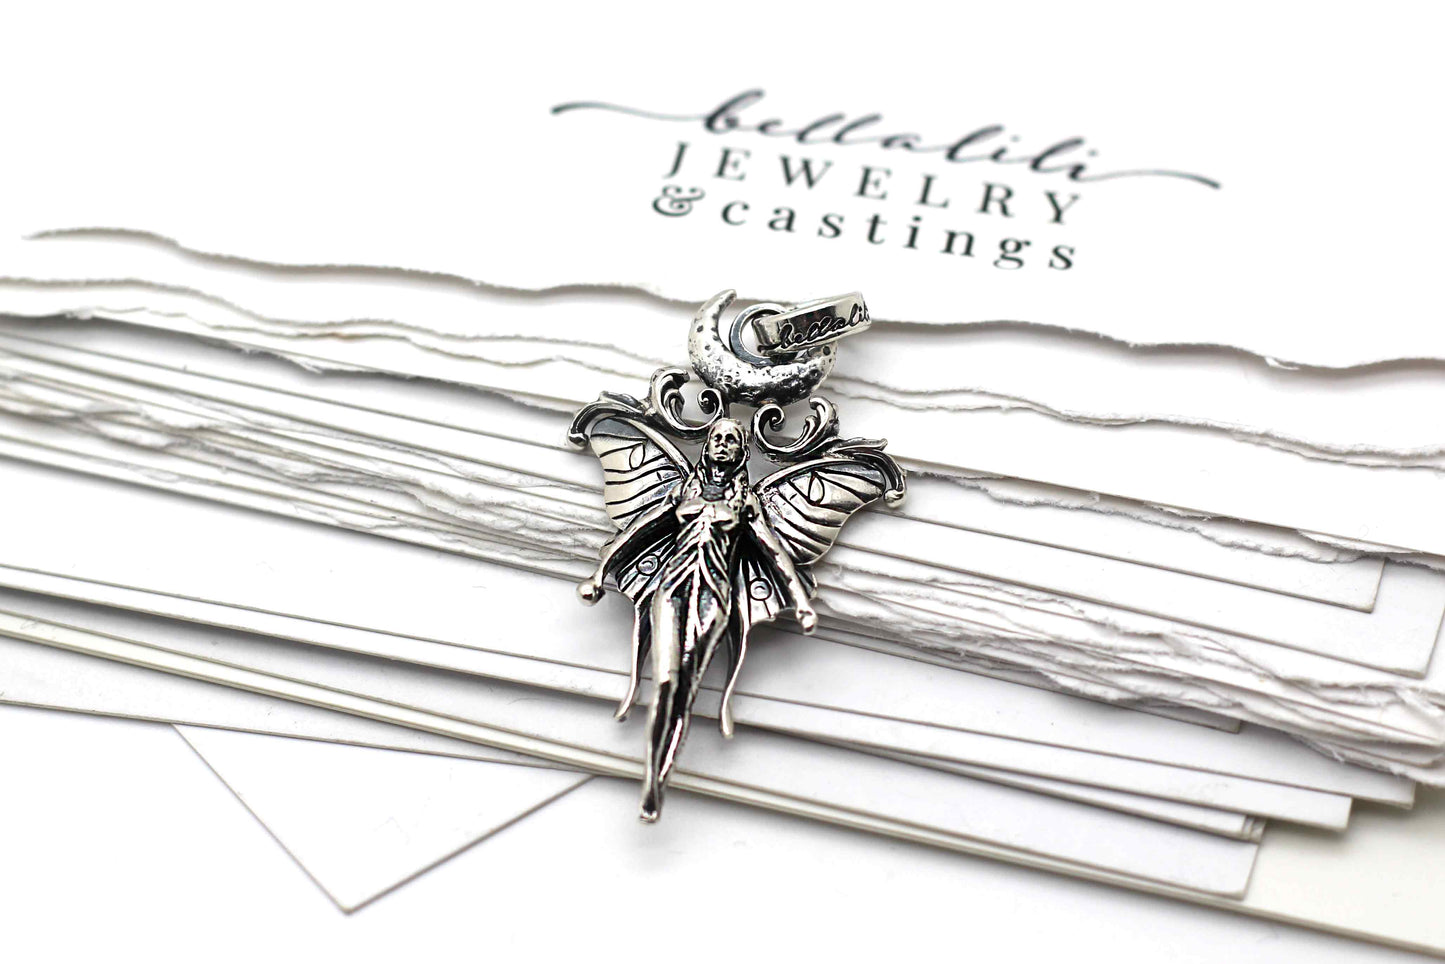 Thotiana Lunar Fairy Queen, Art Nouveau Sterling Silver handmade pendant